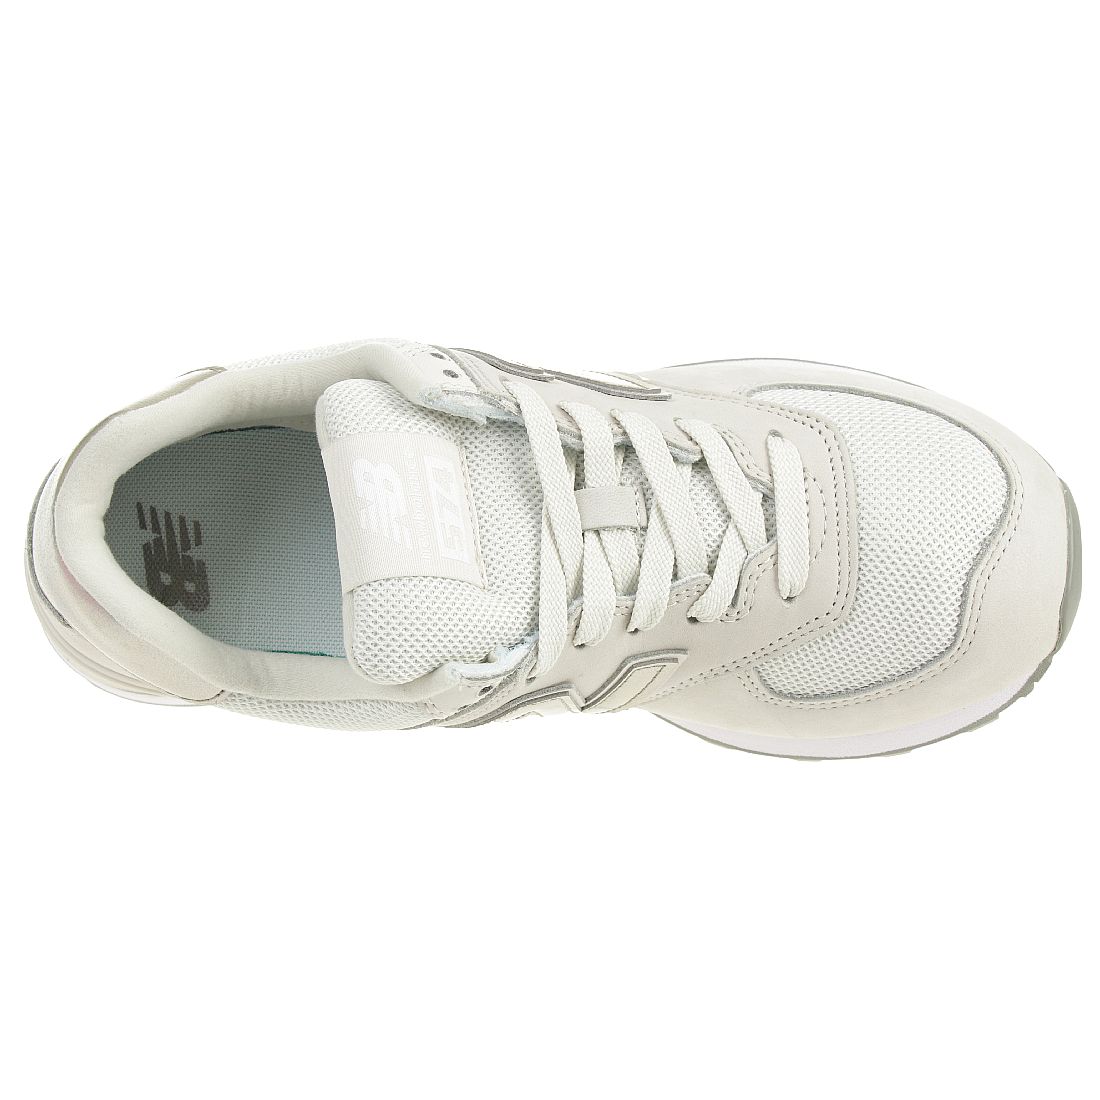 New Balance WL574 WNO Classic Sneaker Damen Schuhe grau